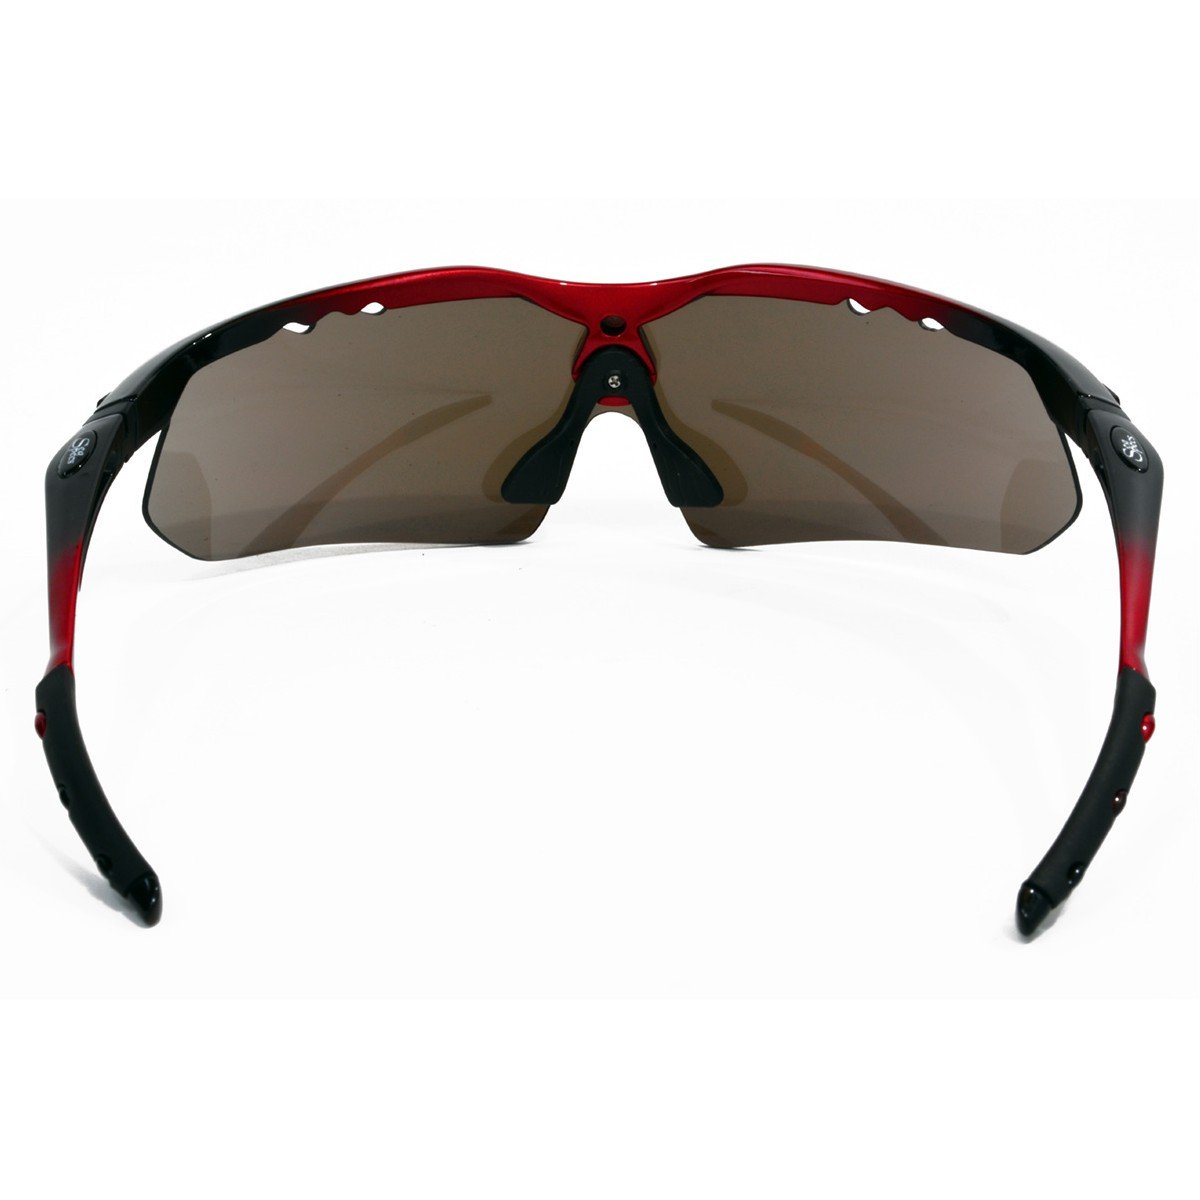 SeaSpecs Cyclist Sunglasses, Black